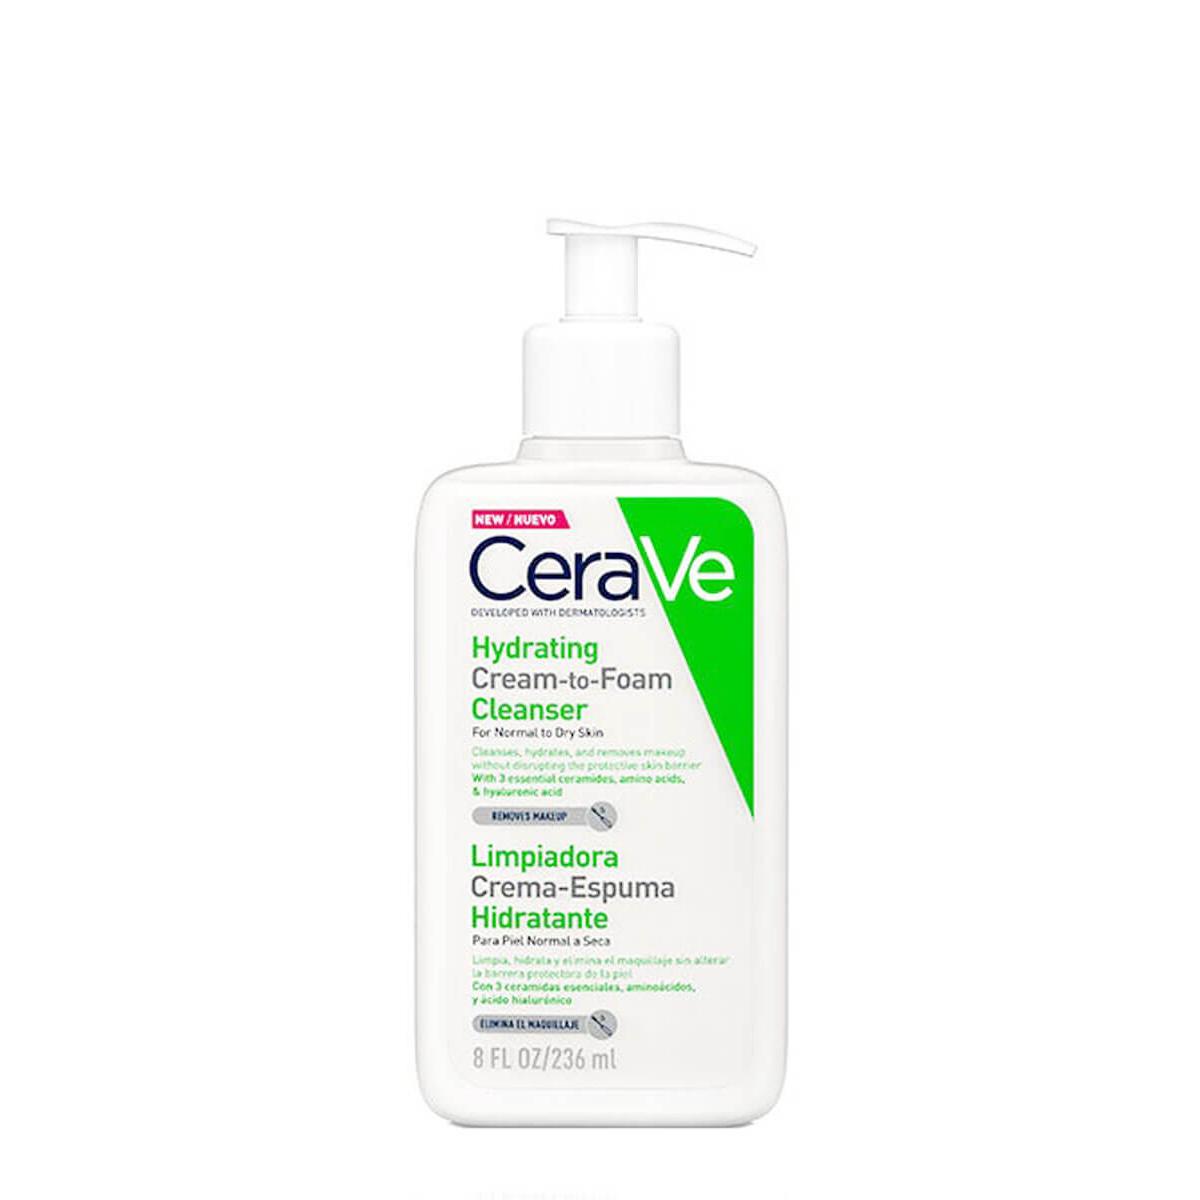 Cerave - Cerave limpiadora crema-espuma hidratante 236 ml